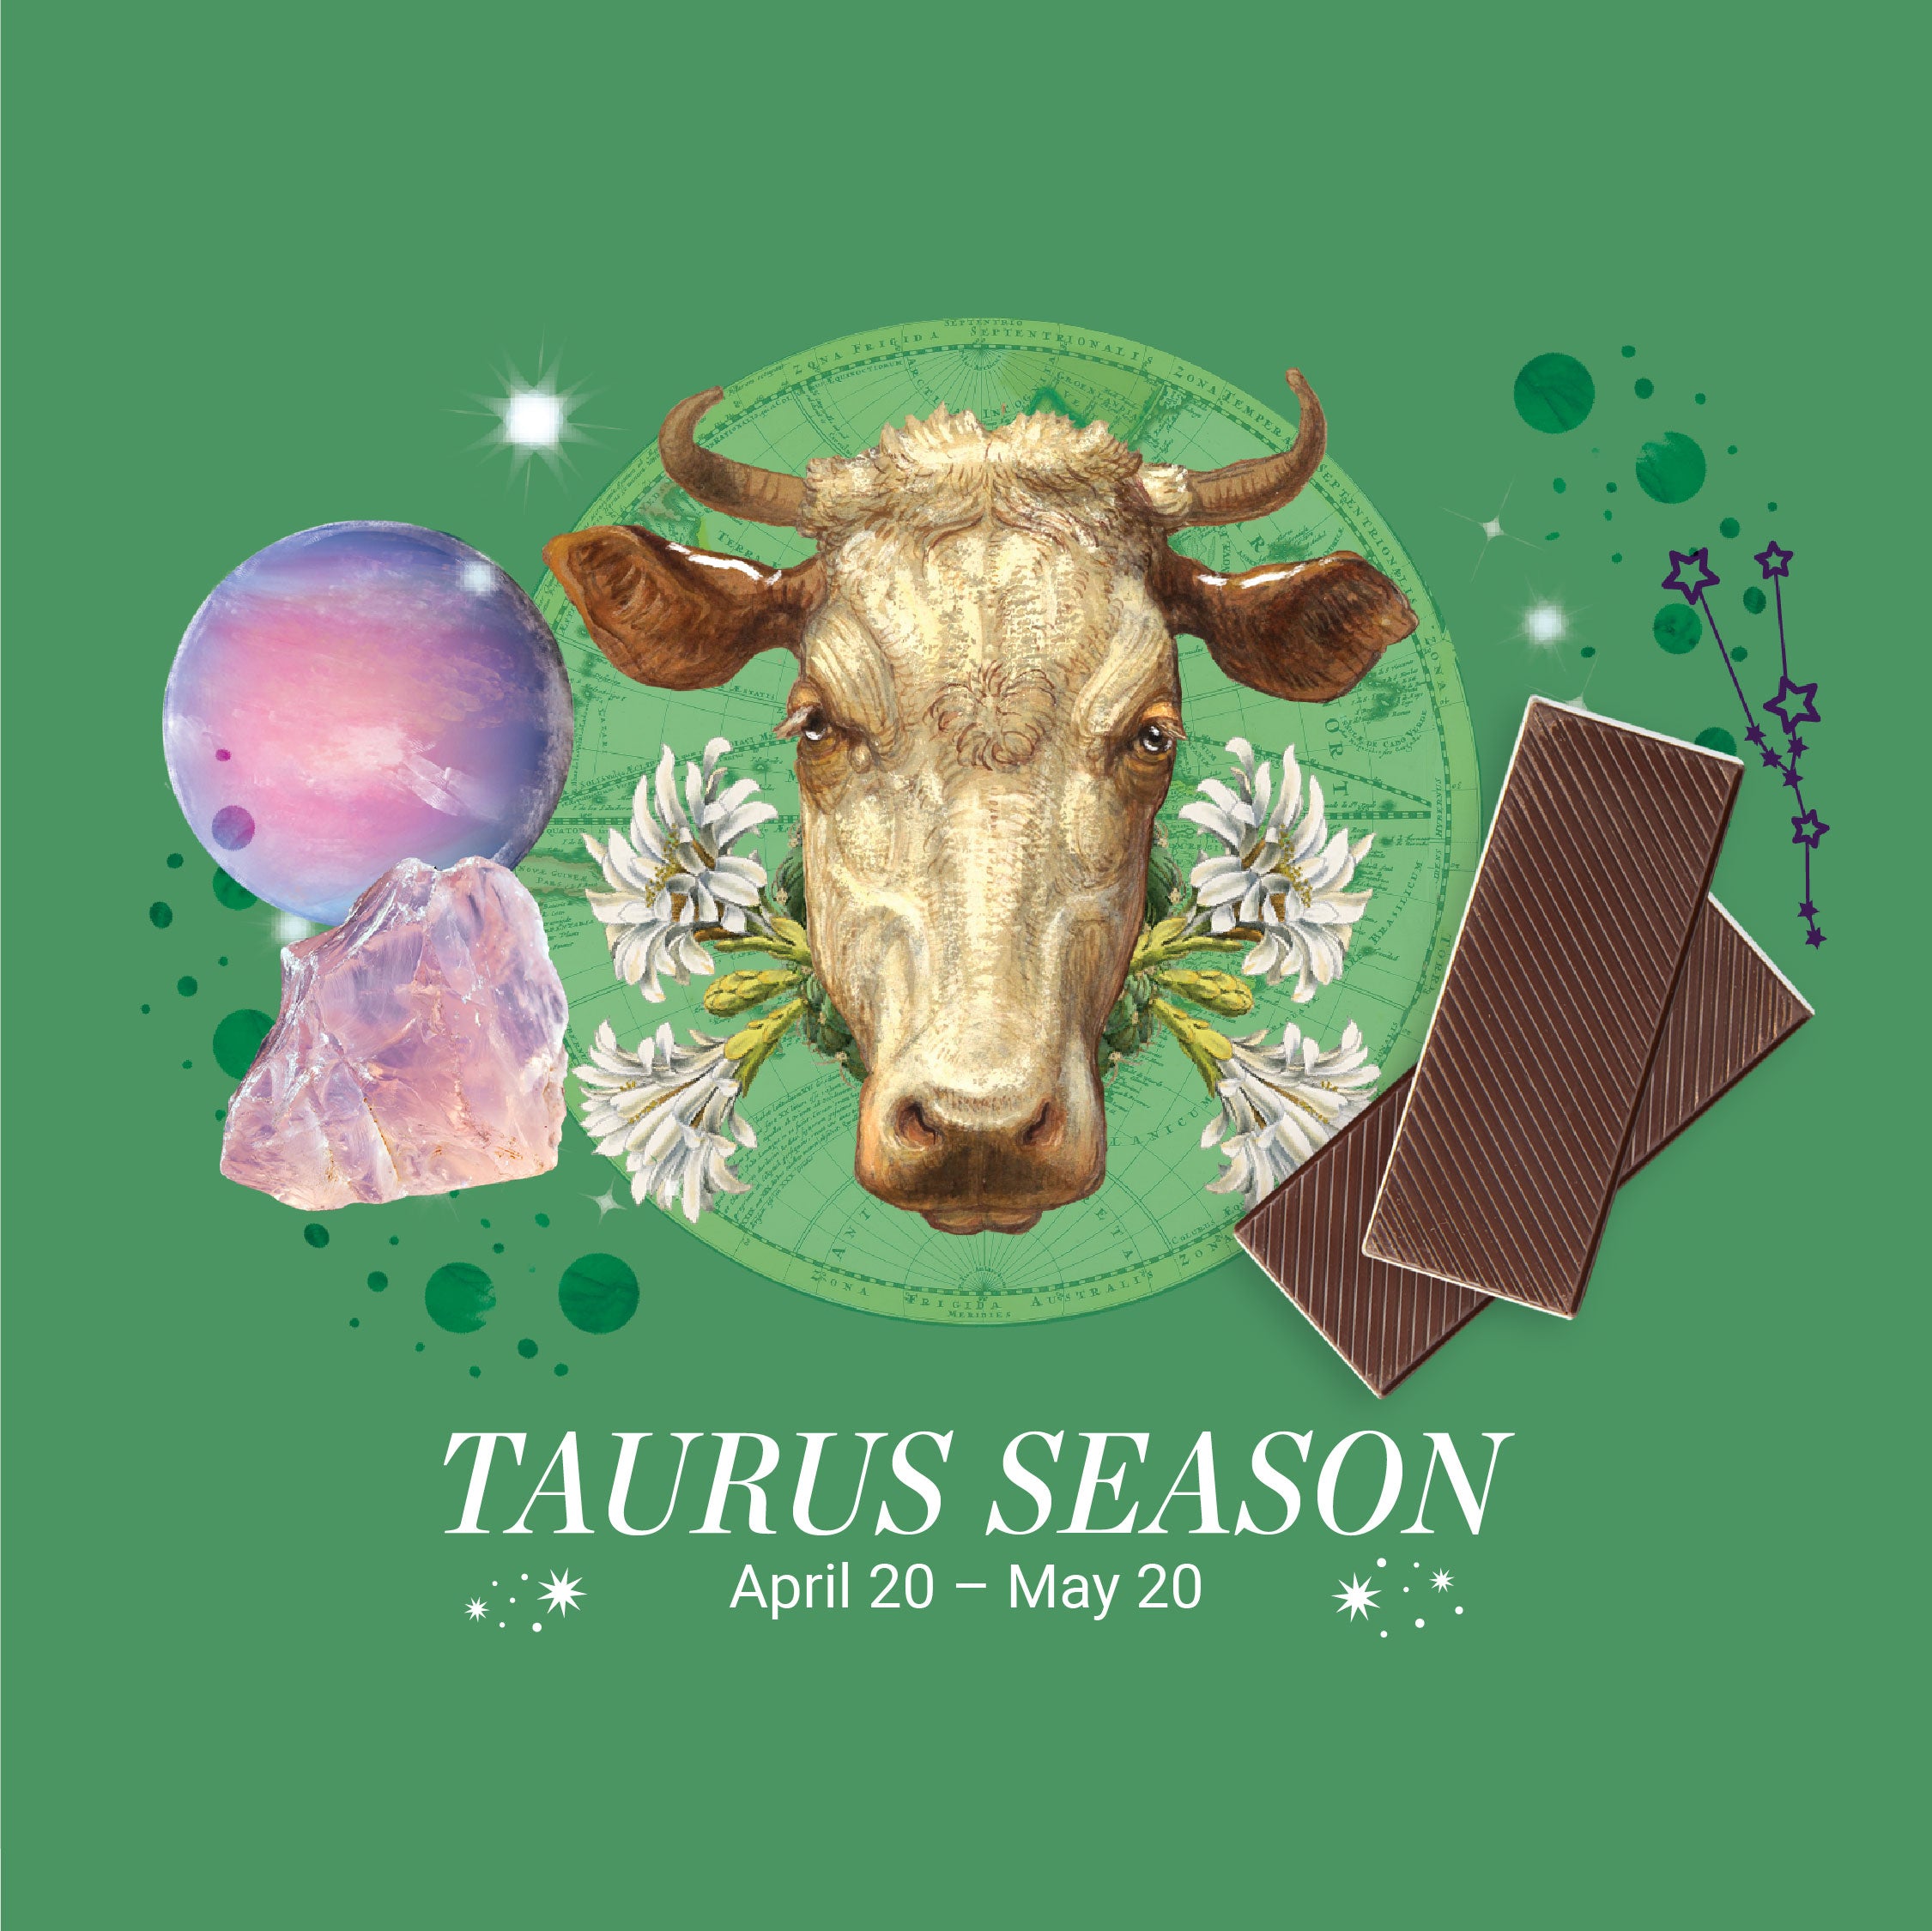 vosges-haut-chocolat-blog/3-chocolate-gifts-for-taurus-season